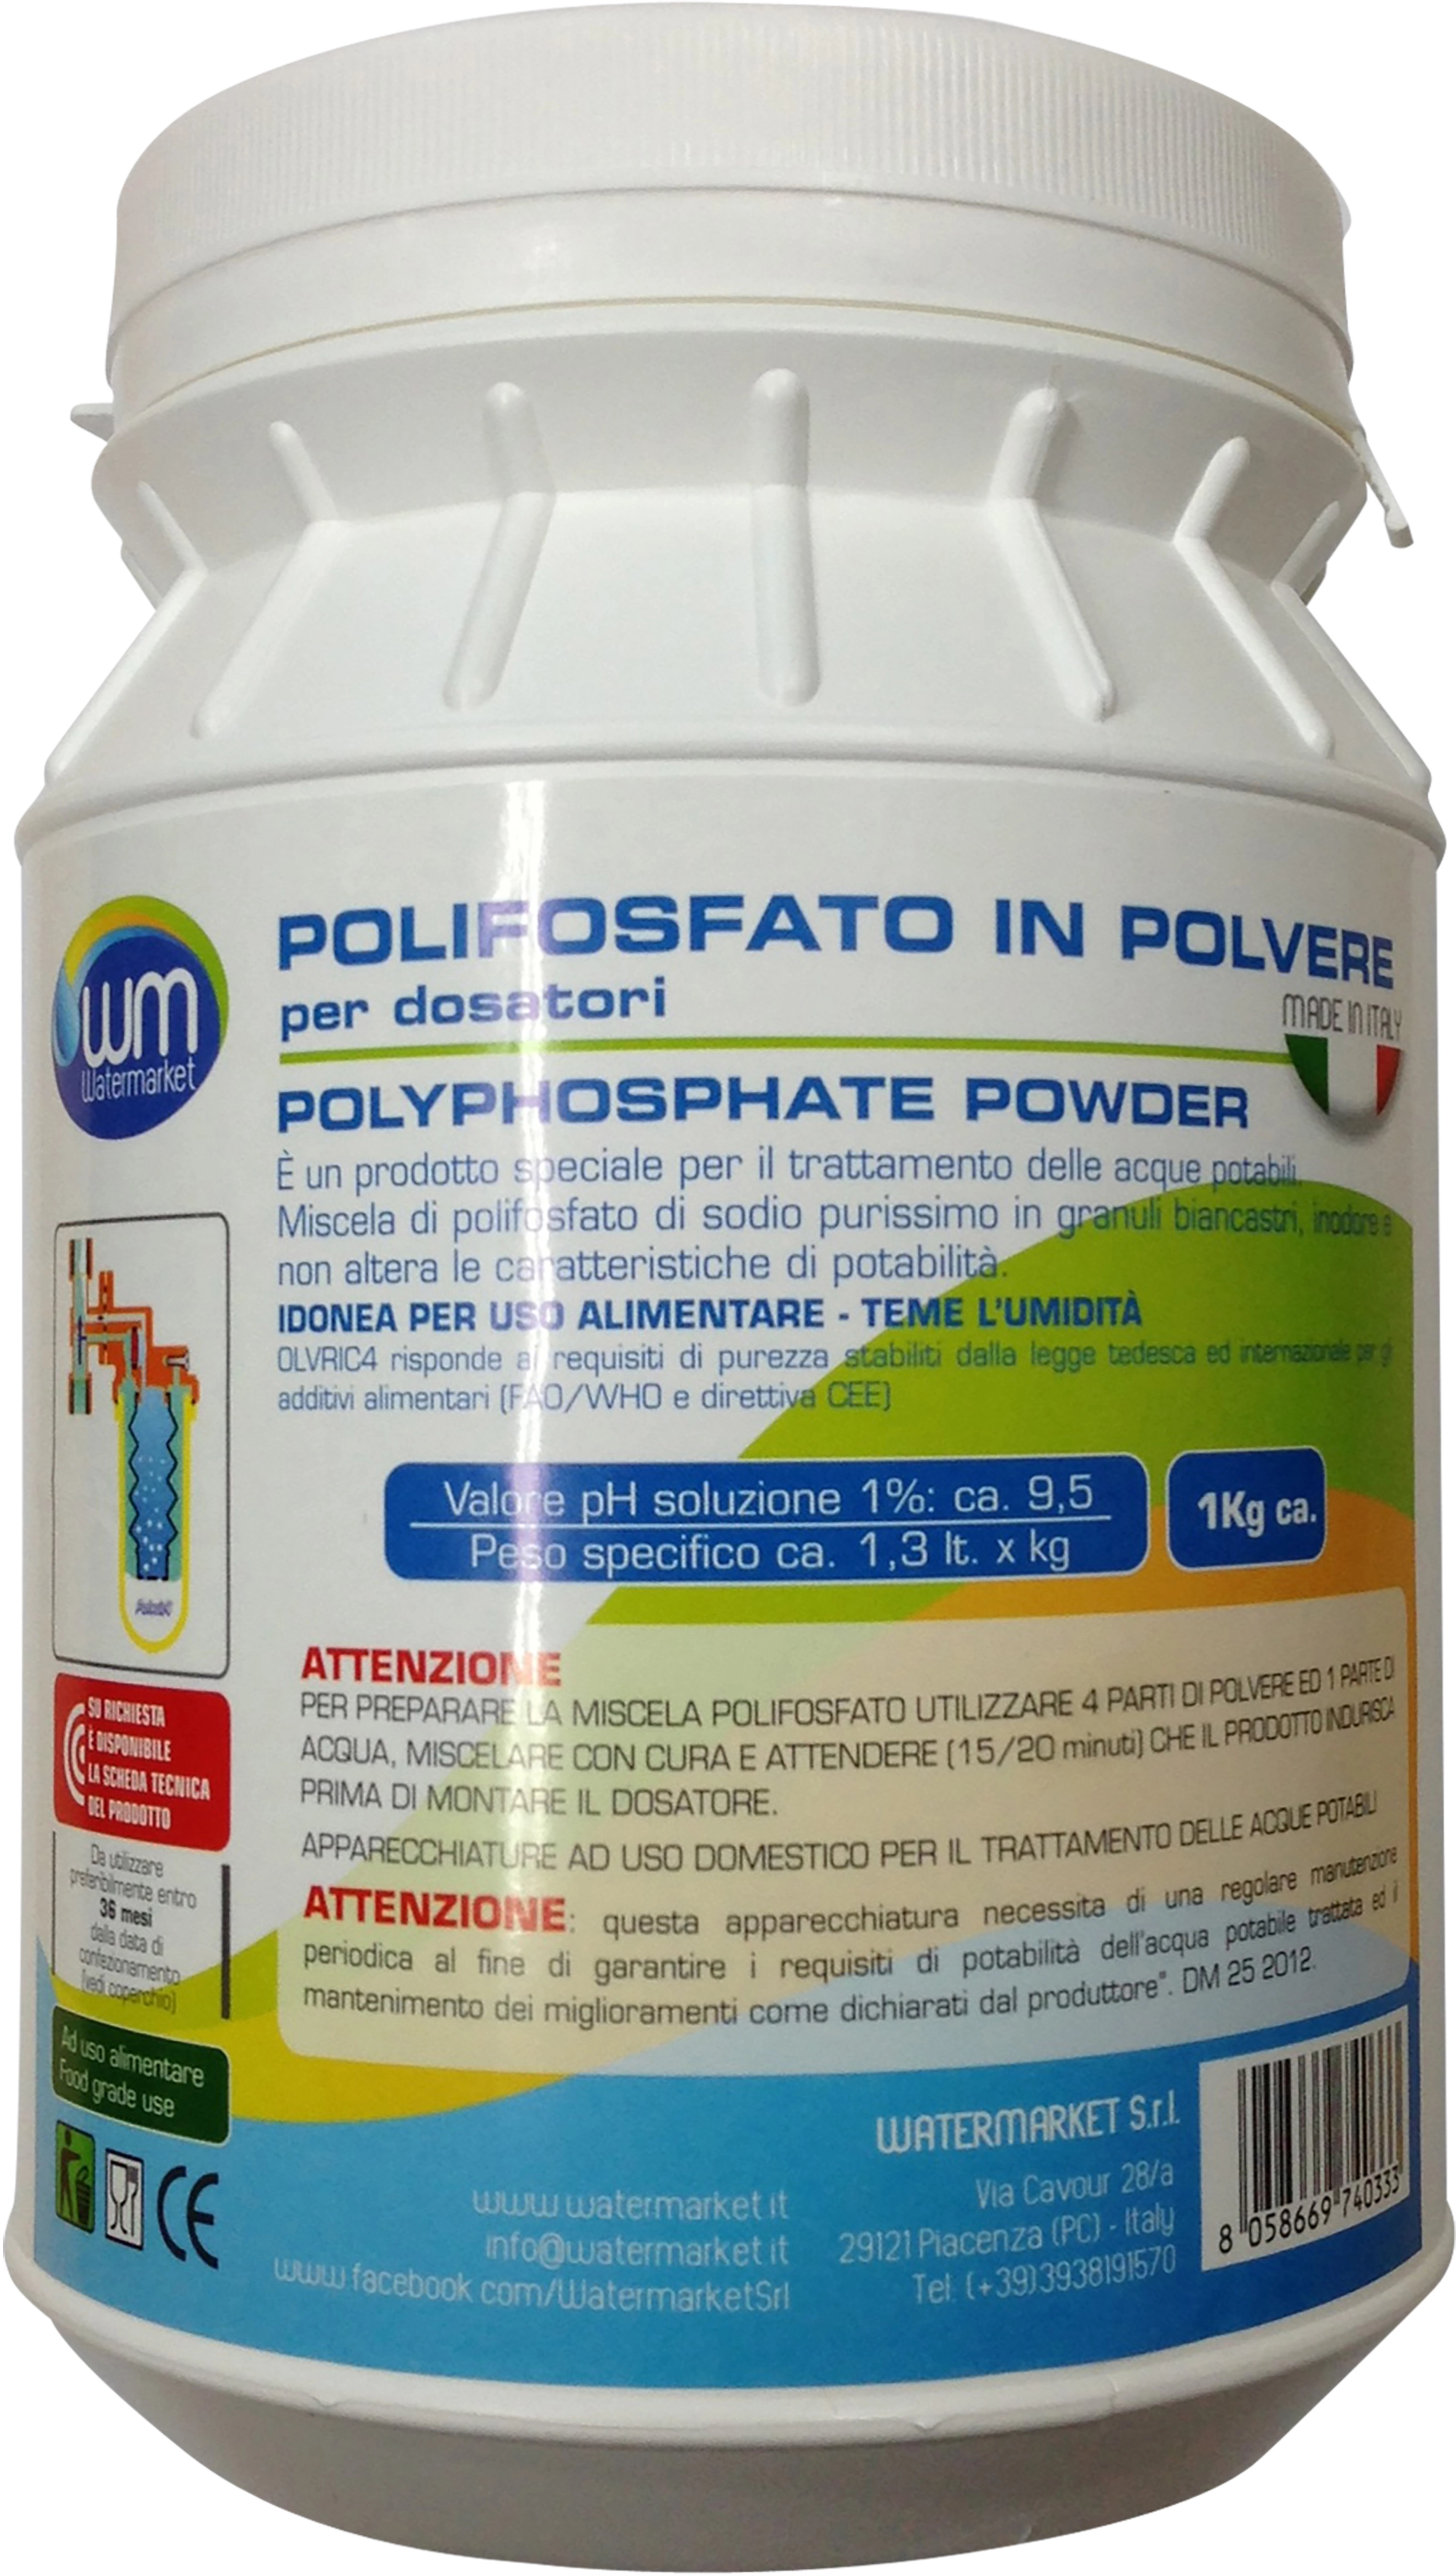 gelphos p ricarica di polifosfato in polvere 1 kg - Acquista Online